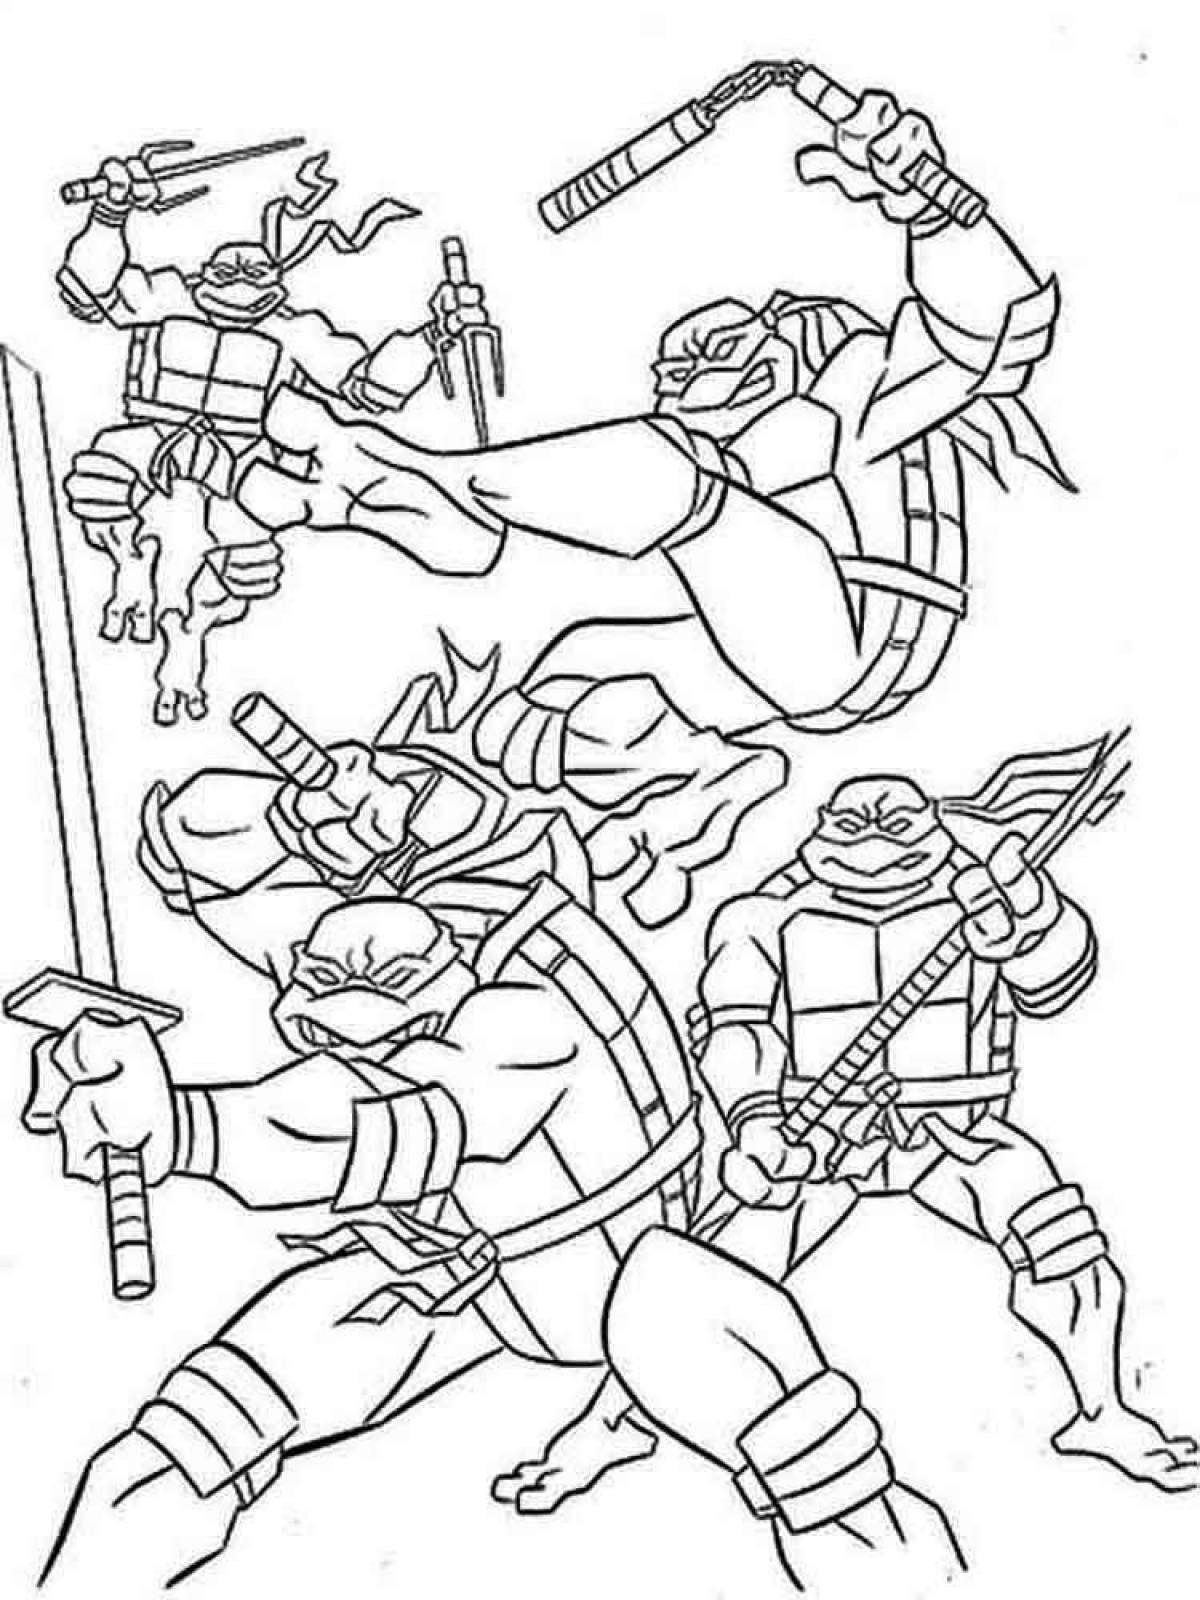 Ninja Turtles coloring book for boys